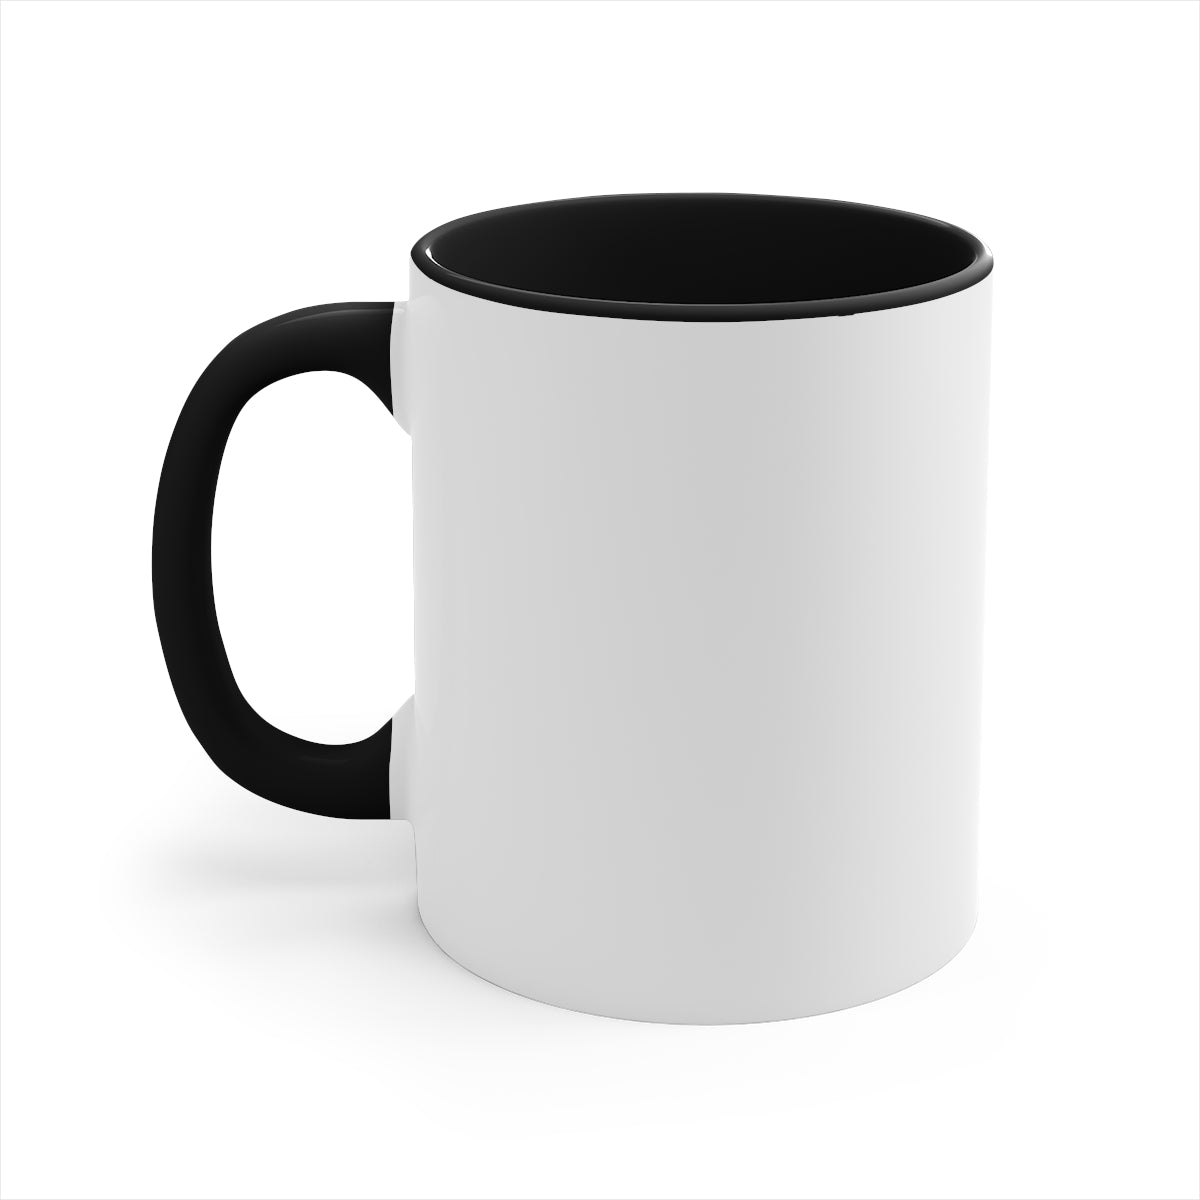 Get Lit Mug Coffee Mug-Holiday Coffee Mugs-New Years Coffee Cup-Gift for Her-Holiday Picks